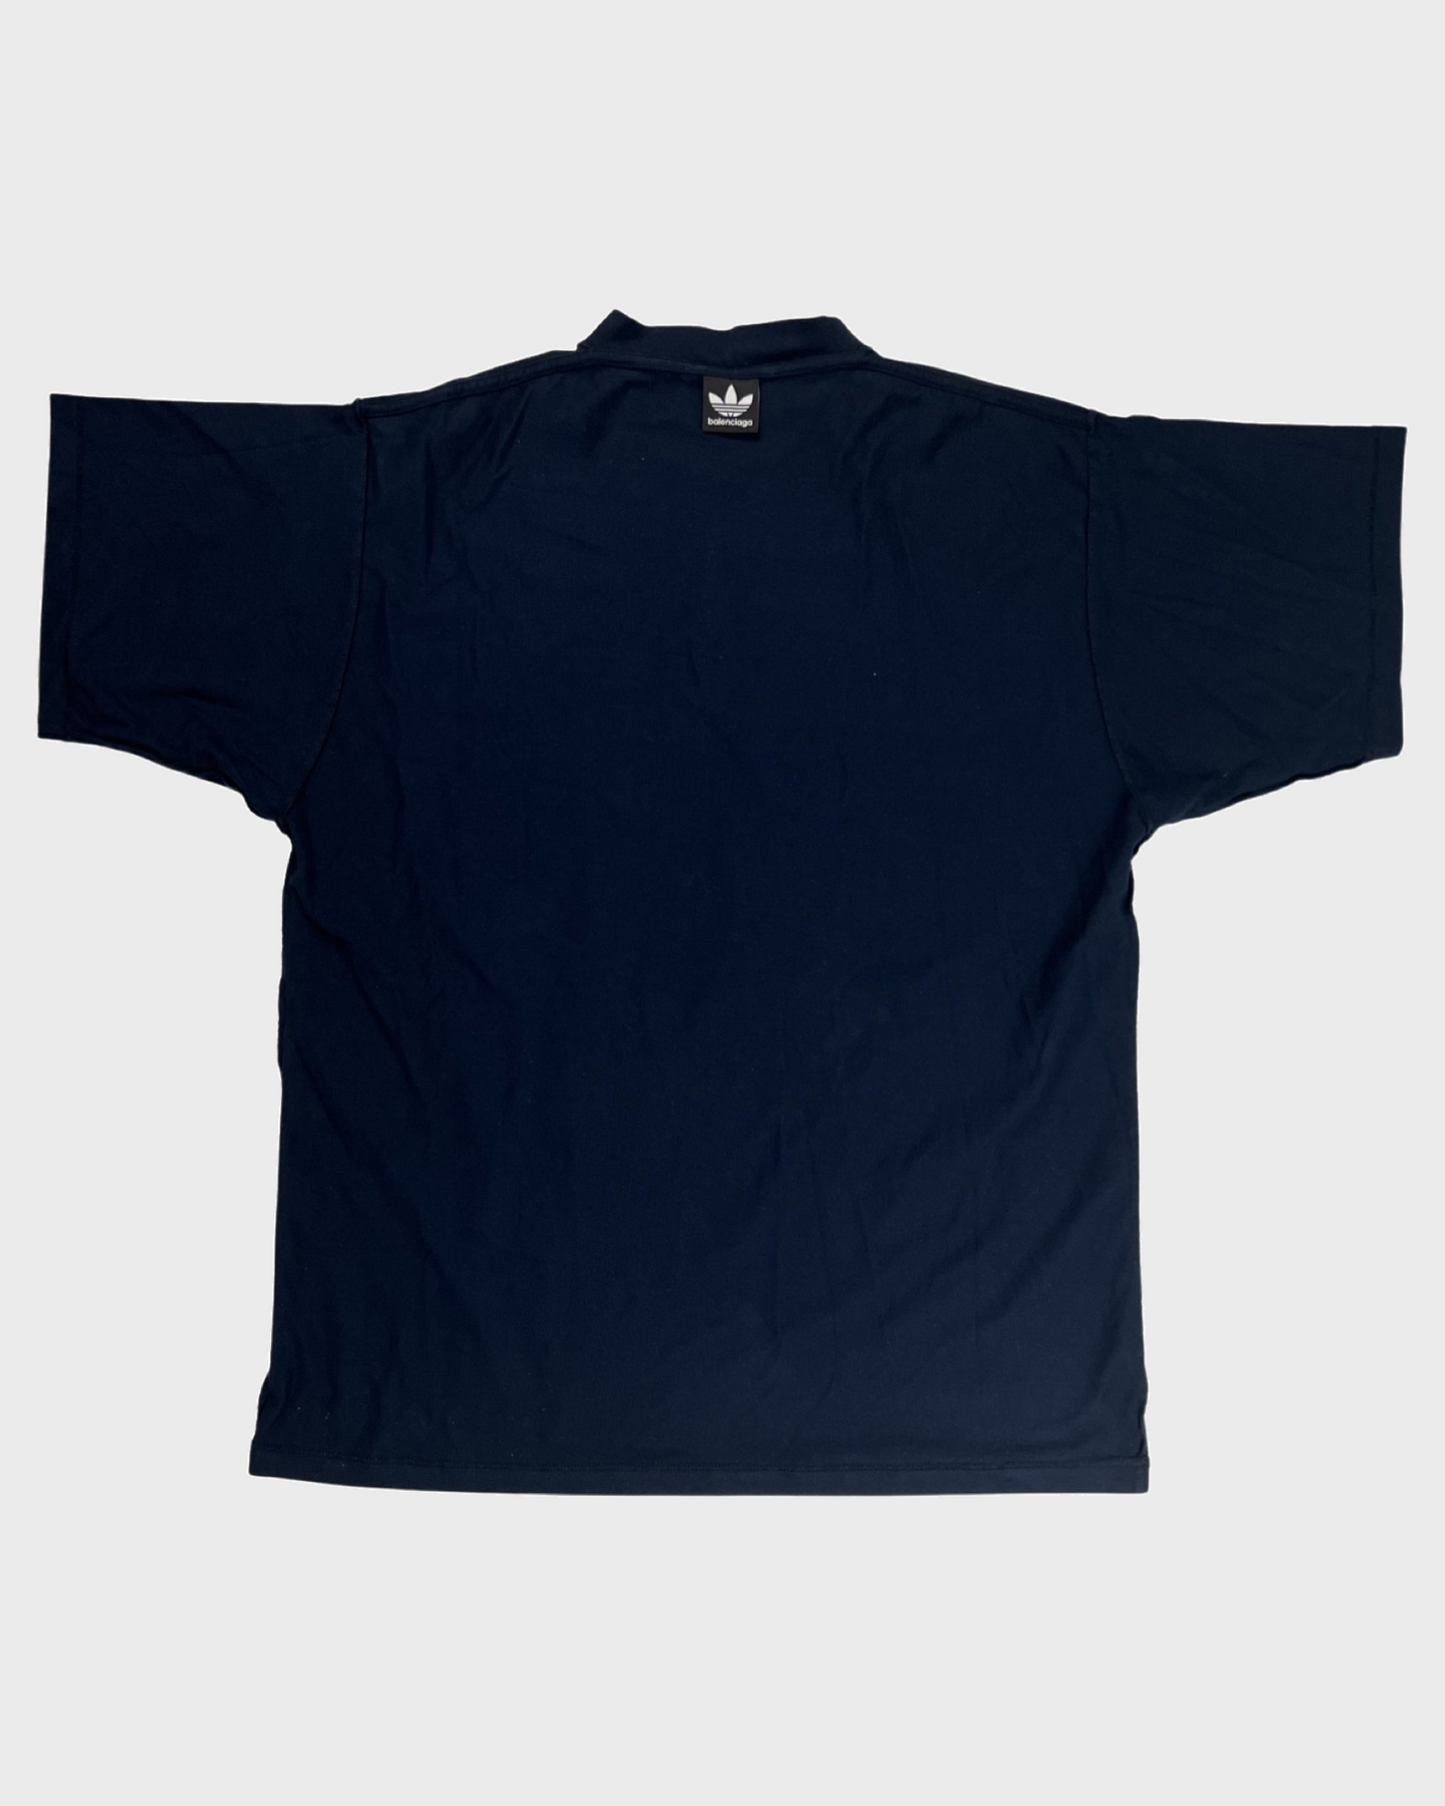 Balenciaga x Adidas navy inside out T-shirt in navy SZ:1